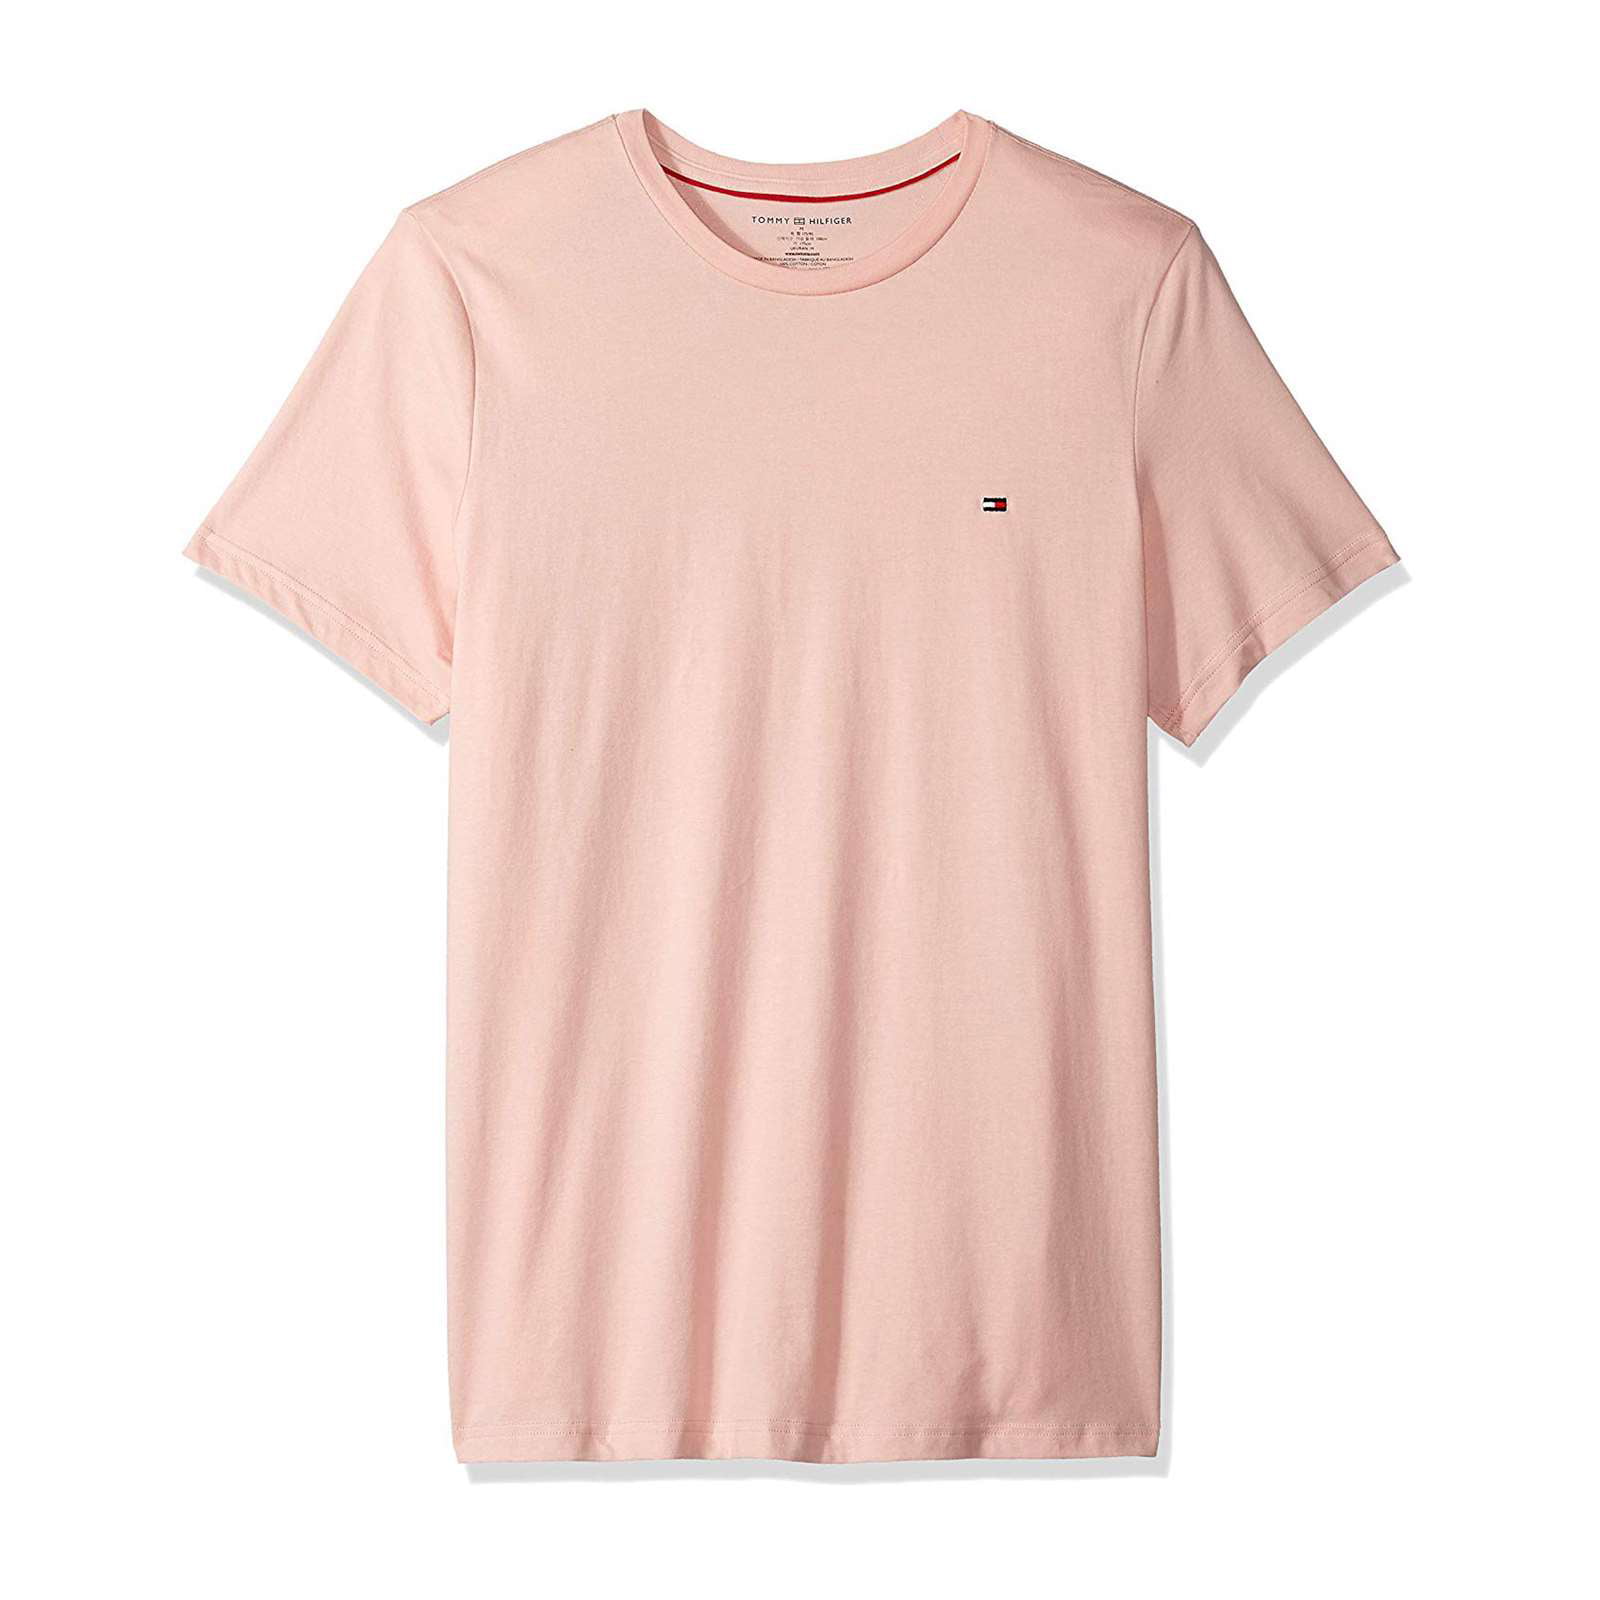 mens pink tommy hilfiger t shirt